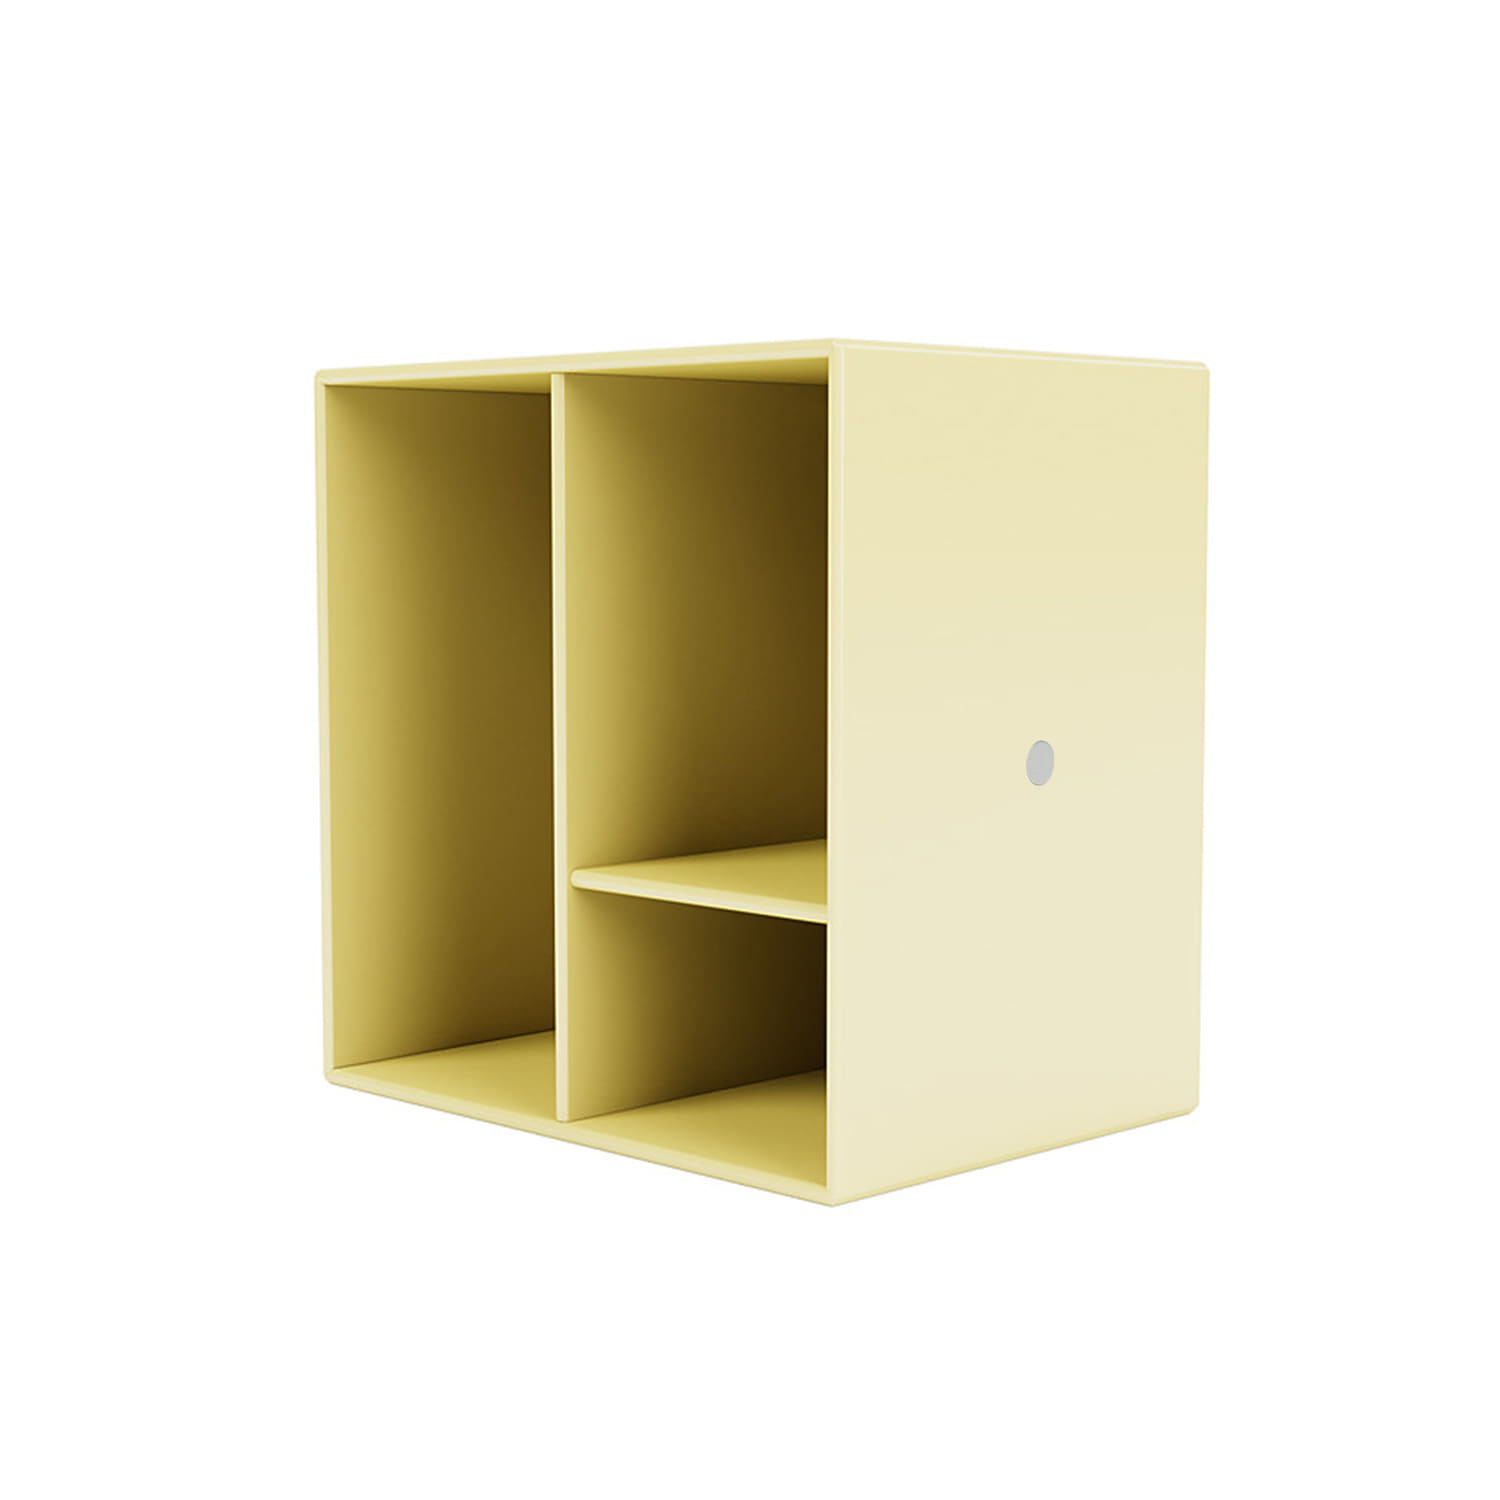 [Refurb] Mini 1002 with shelves, 4colors